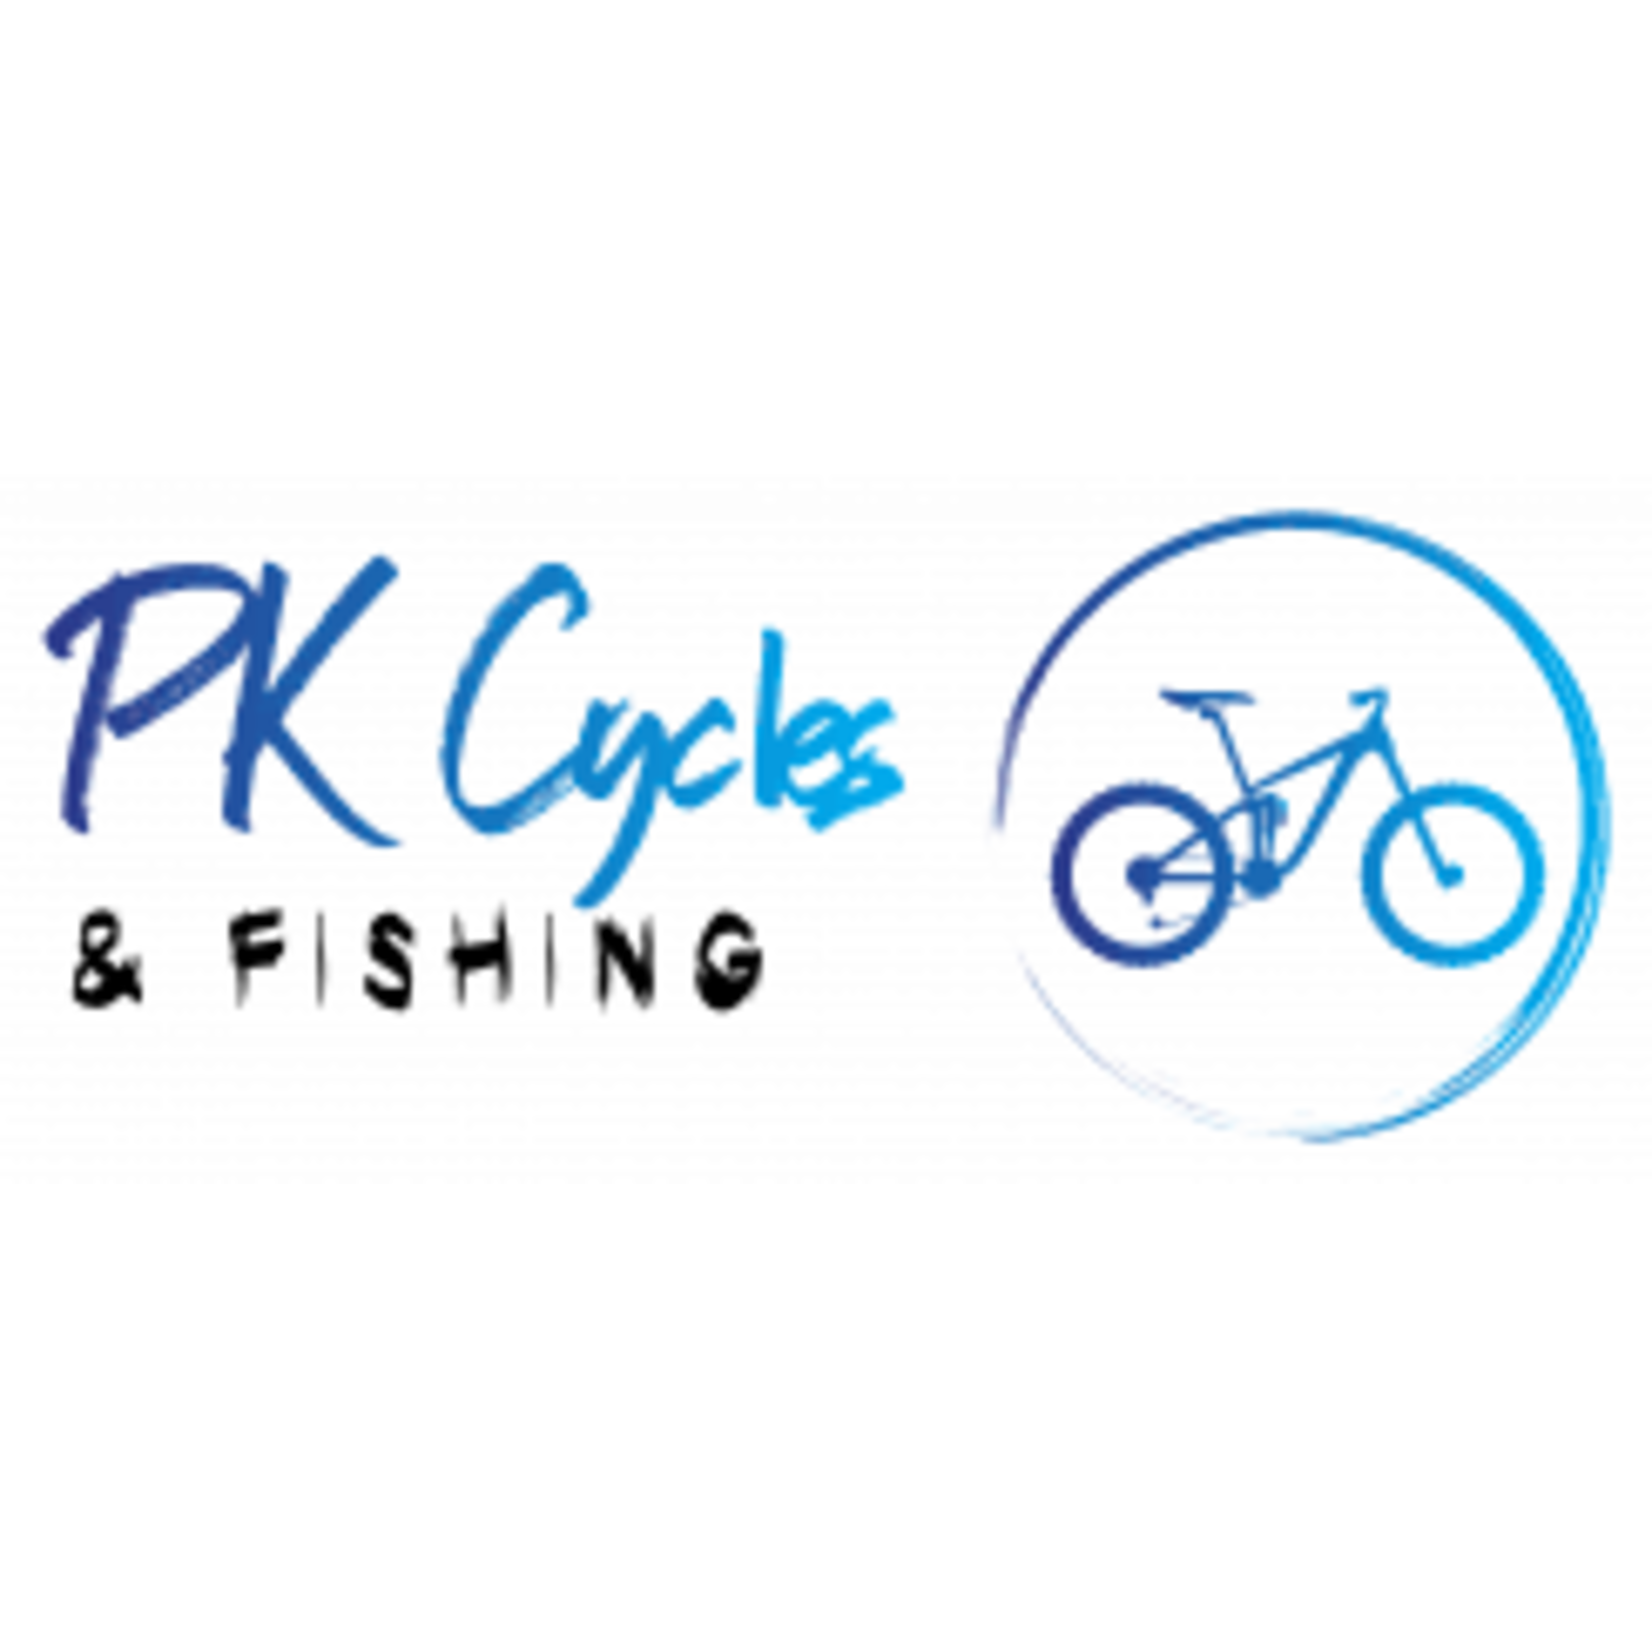 PK Cycles PK CYCLES Gift Voucher